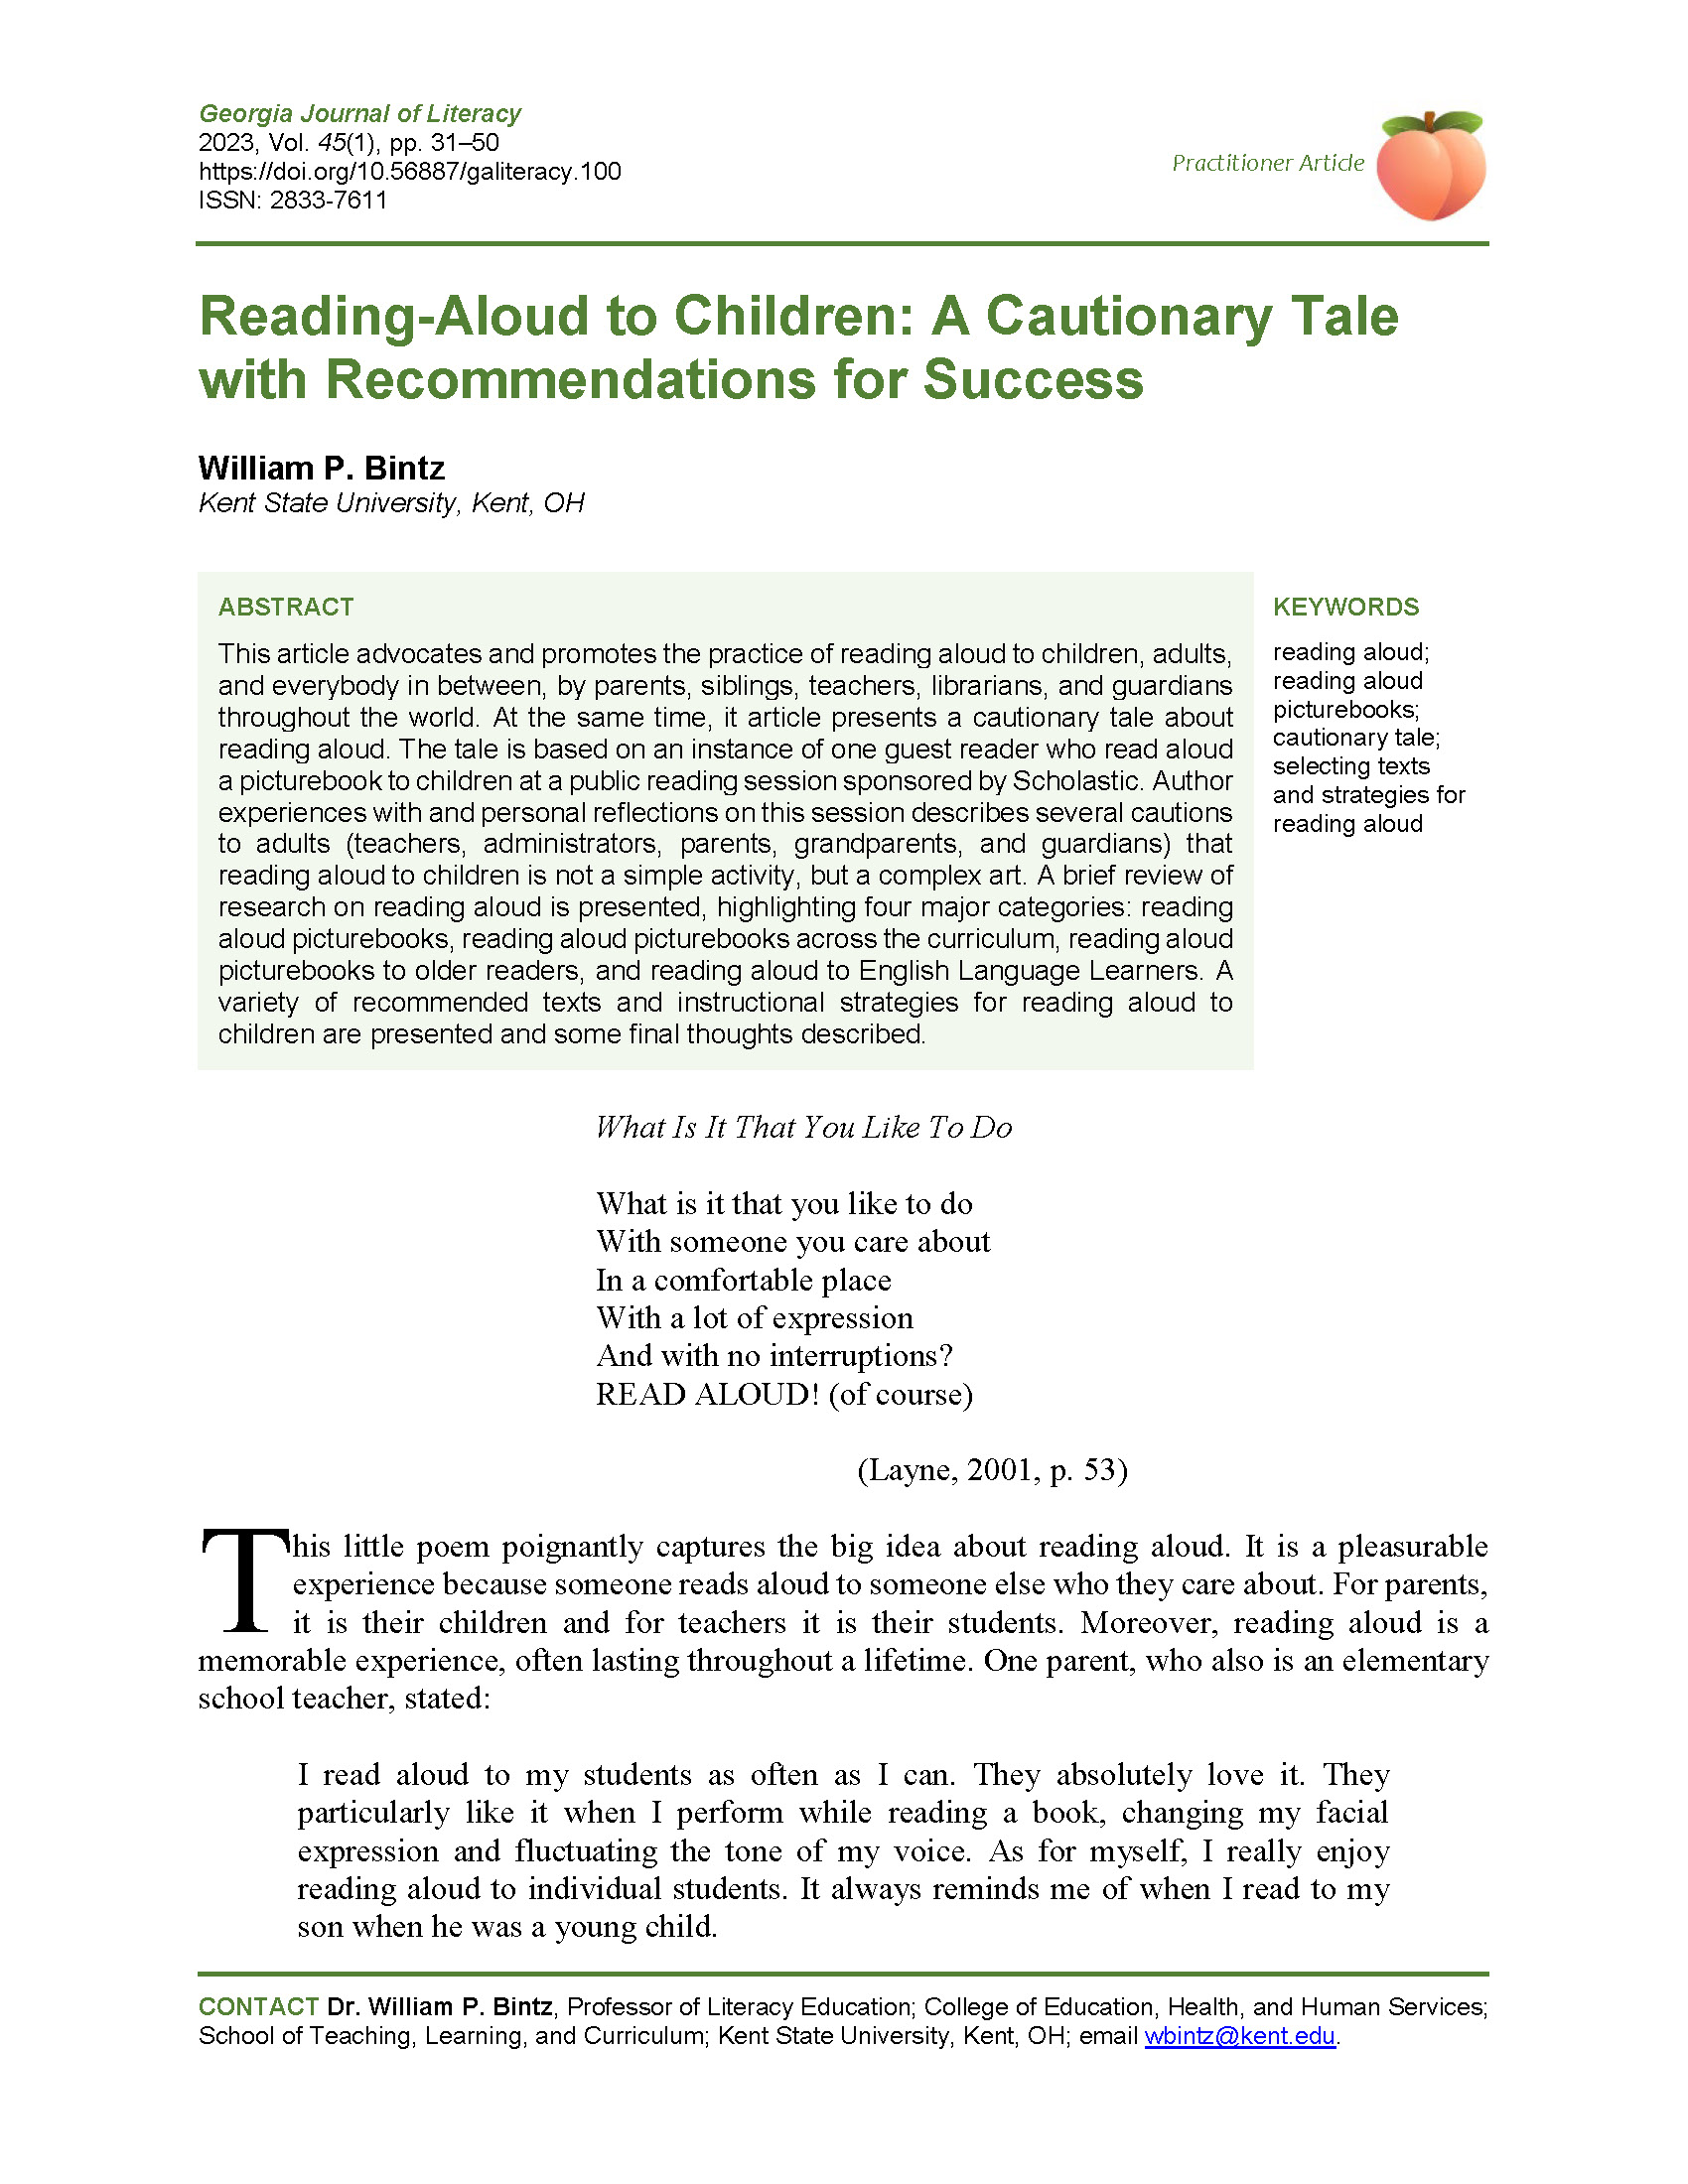 Reading-Aloud to Children (Bintz, 2023)